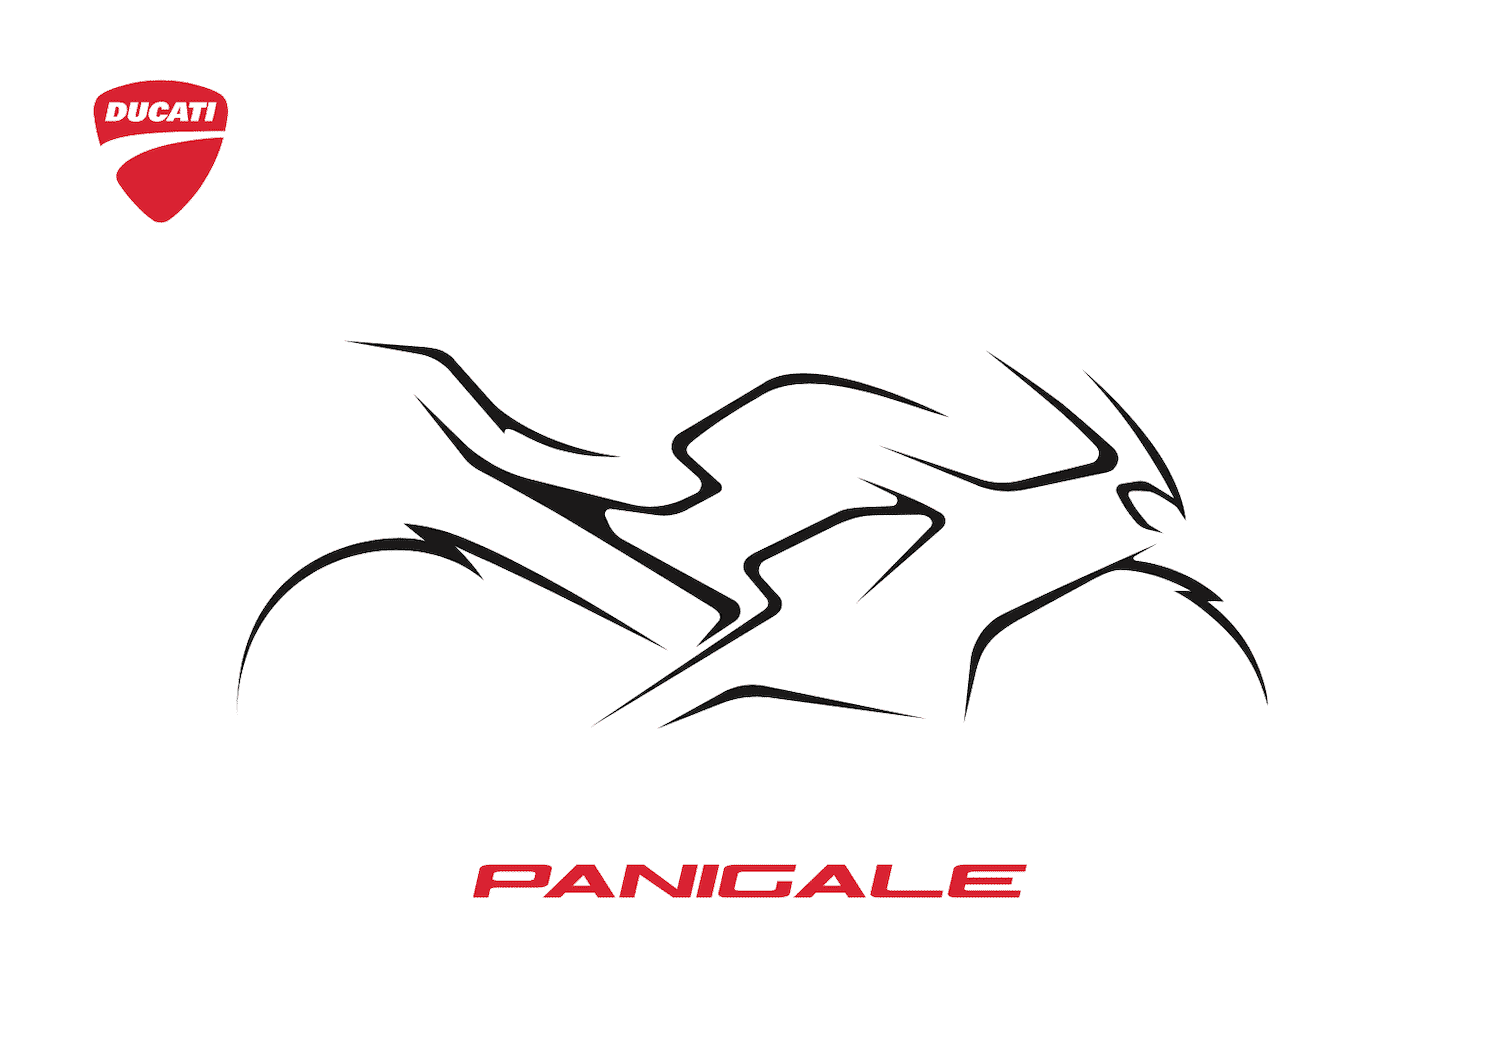 Ducati Panigale manual cover photo